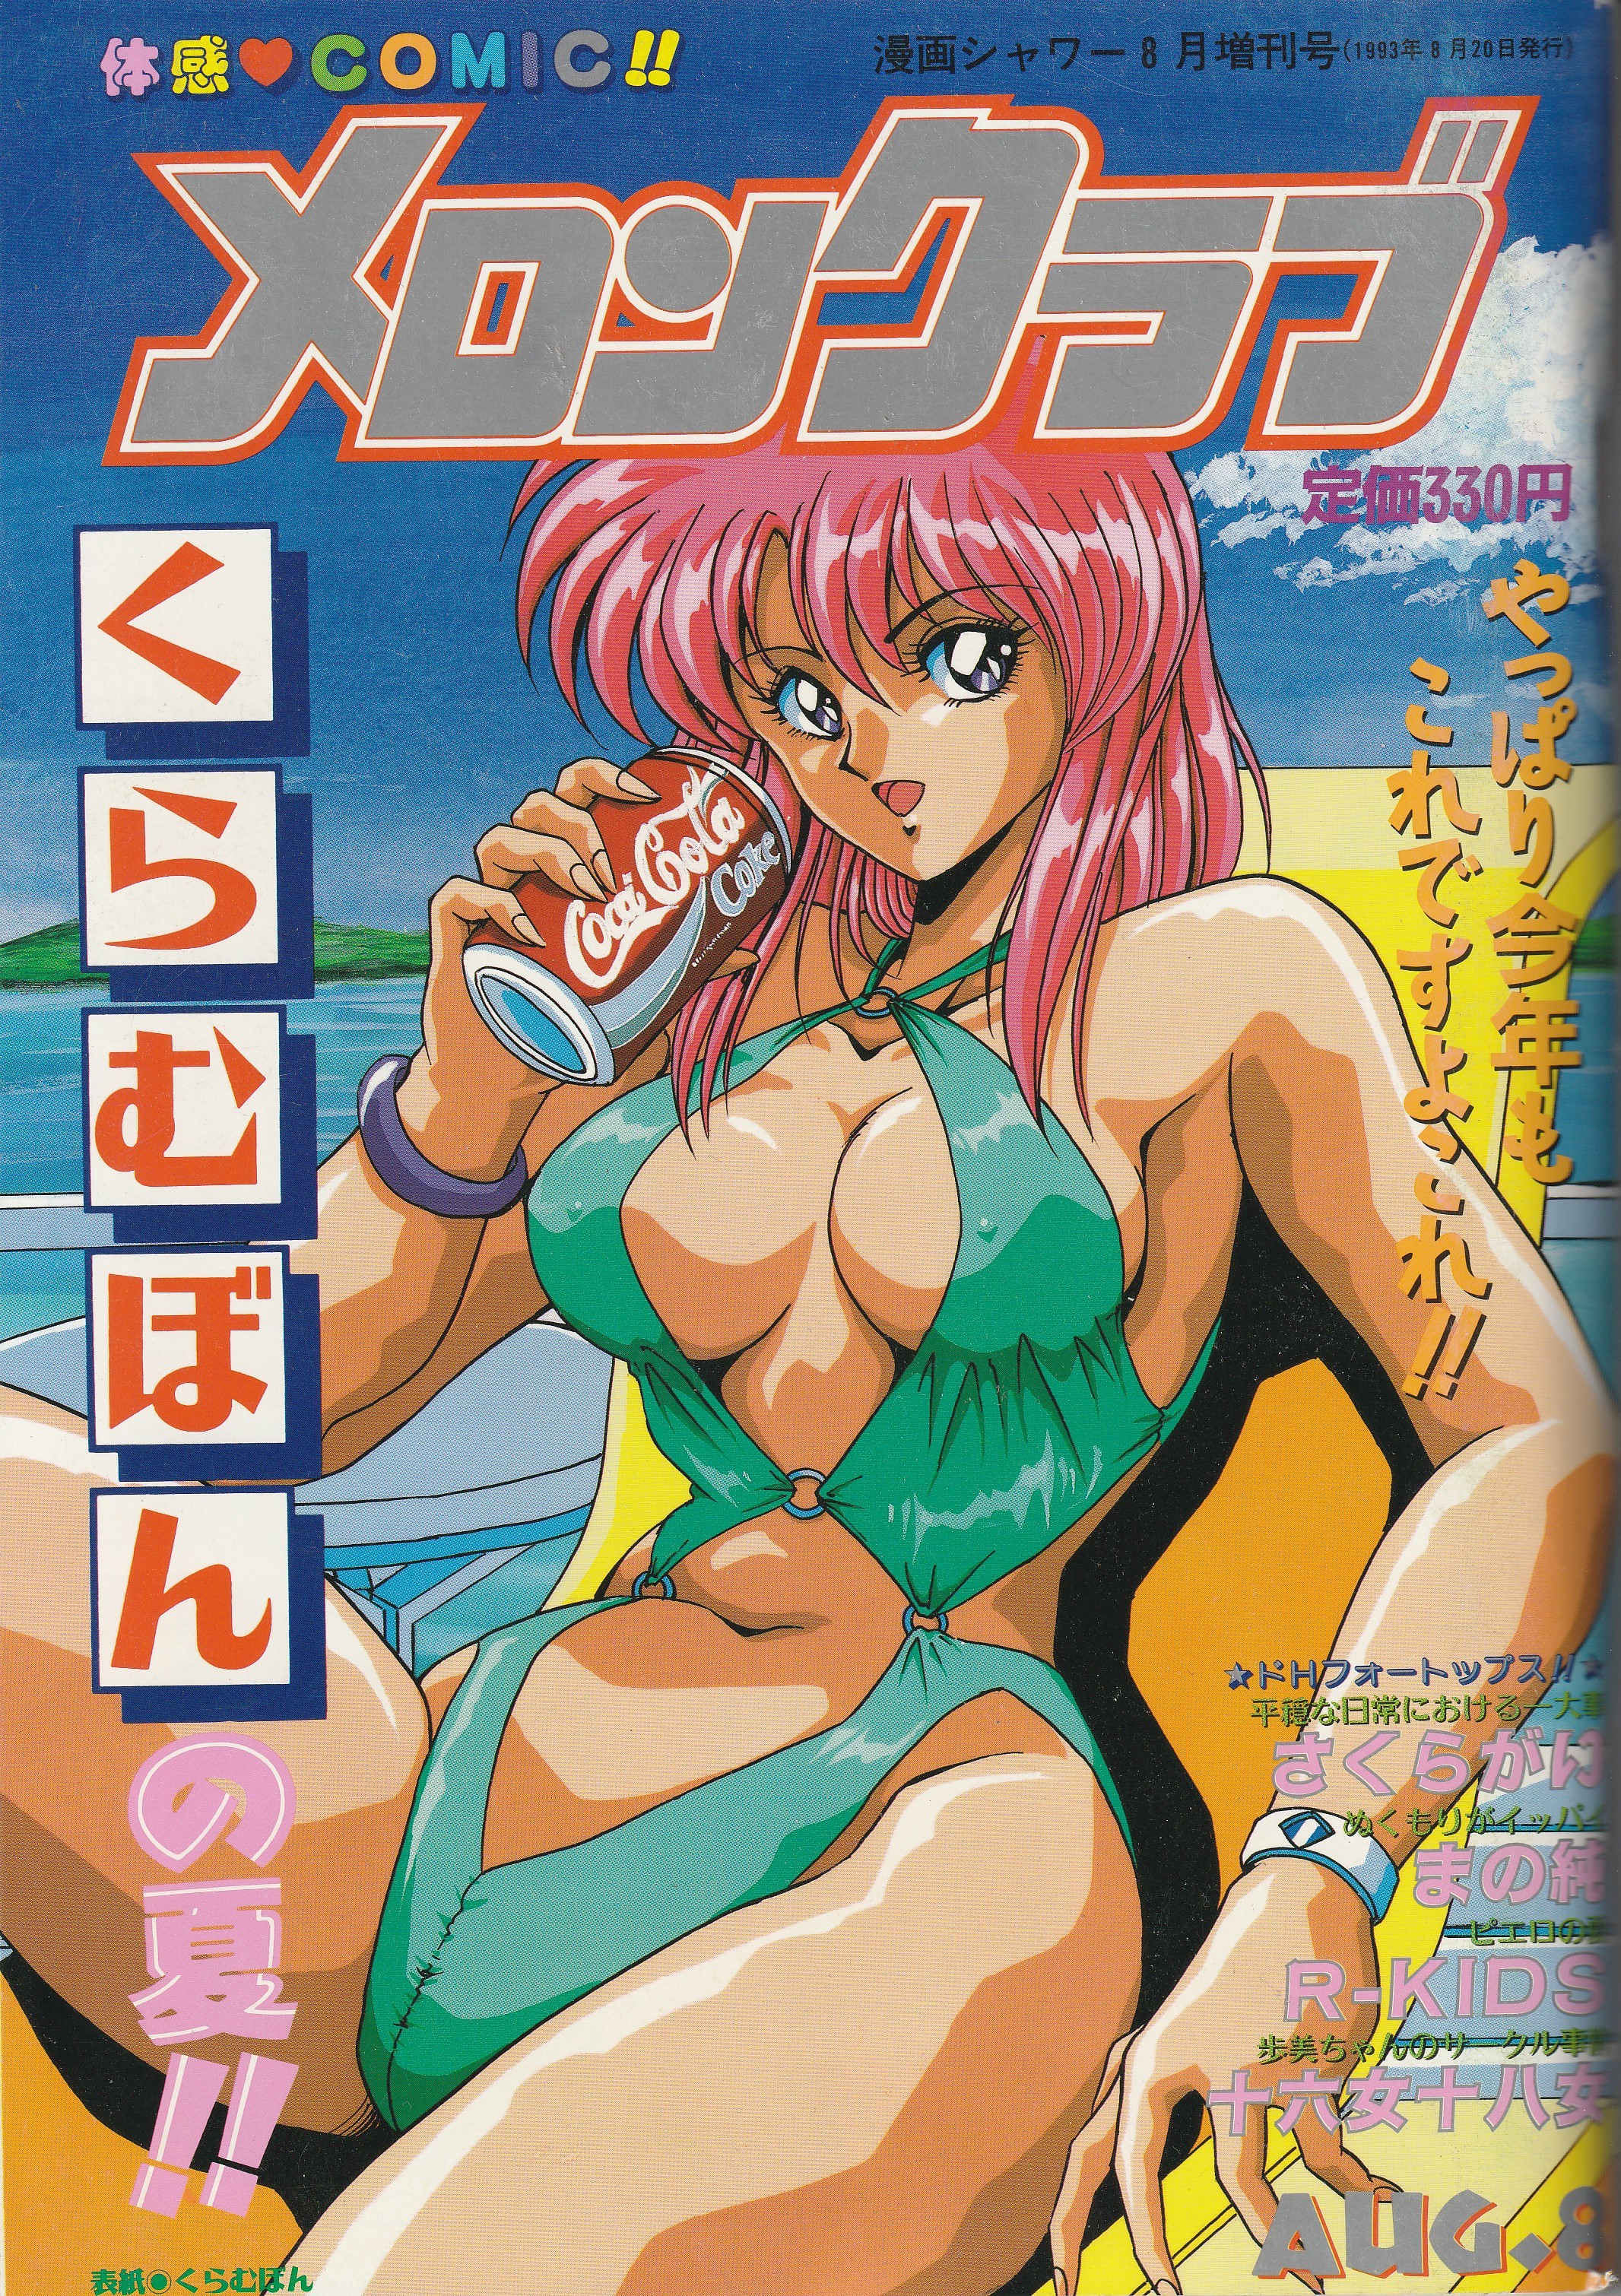 Anime Japanese Porn Magazines - Melon Club #1 Japanese Adult Manga Magazine | Comic Books - Modern Age /  HipComic